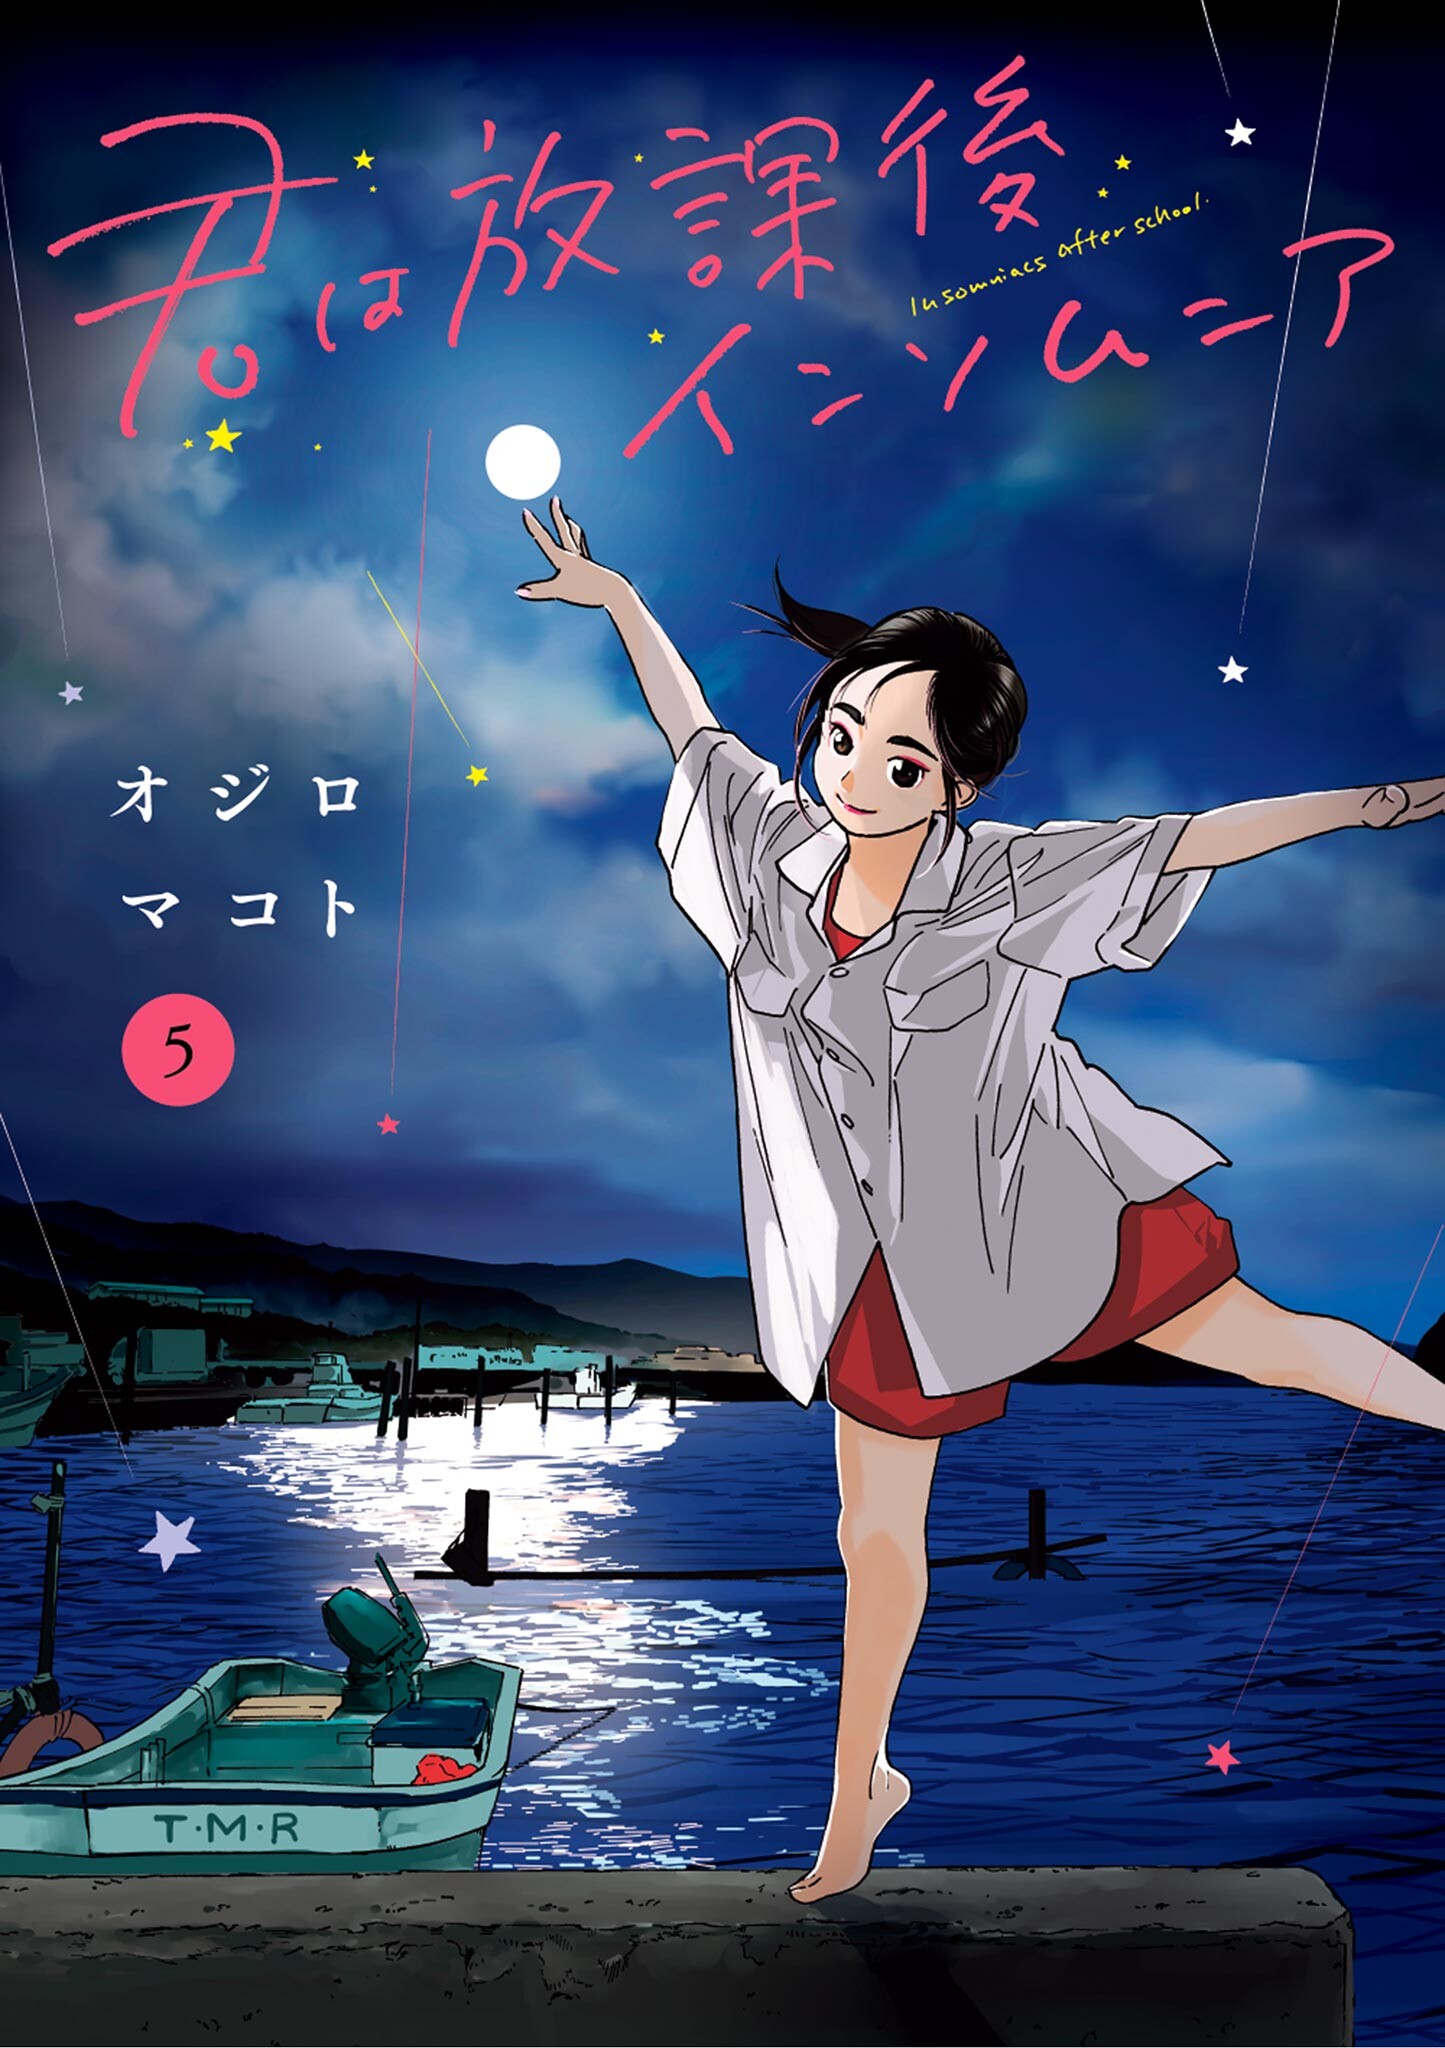 Manga Mogura RE on X: Kimi wa houkago Insomnia vol 10 by Makoto Ojiro  will be out on Sep 12, 2022 / X